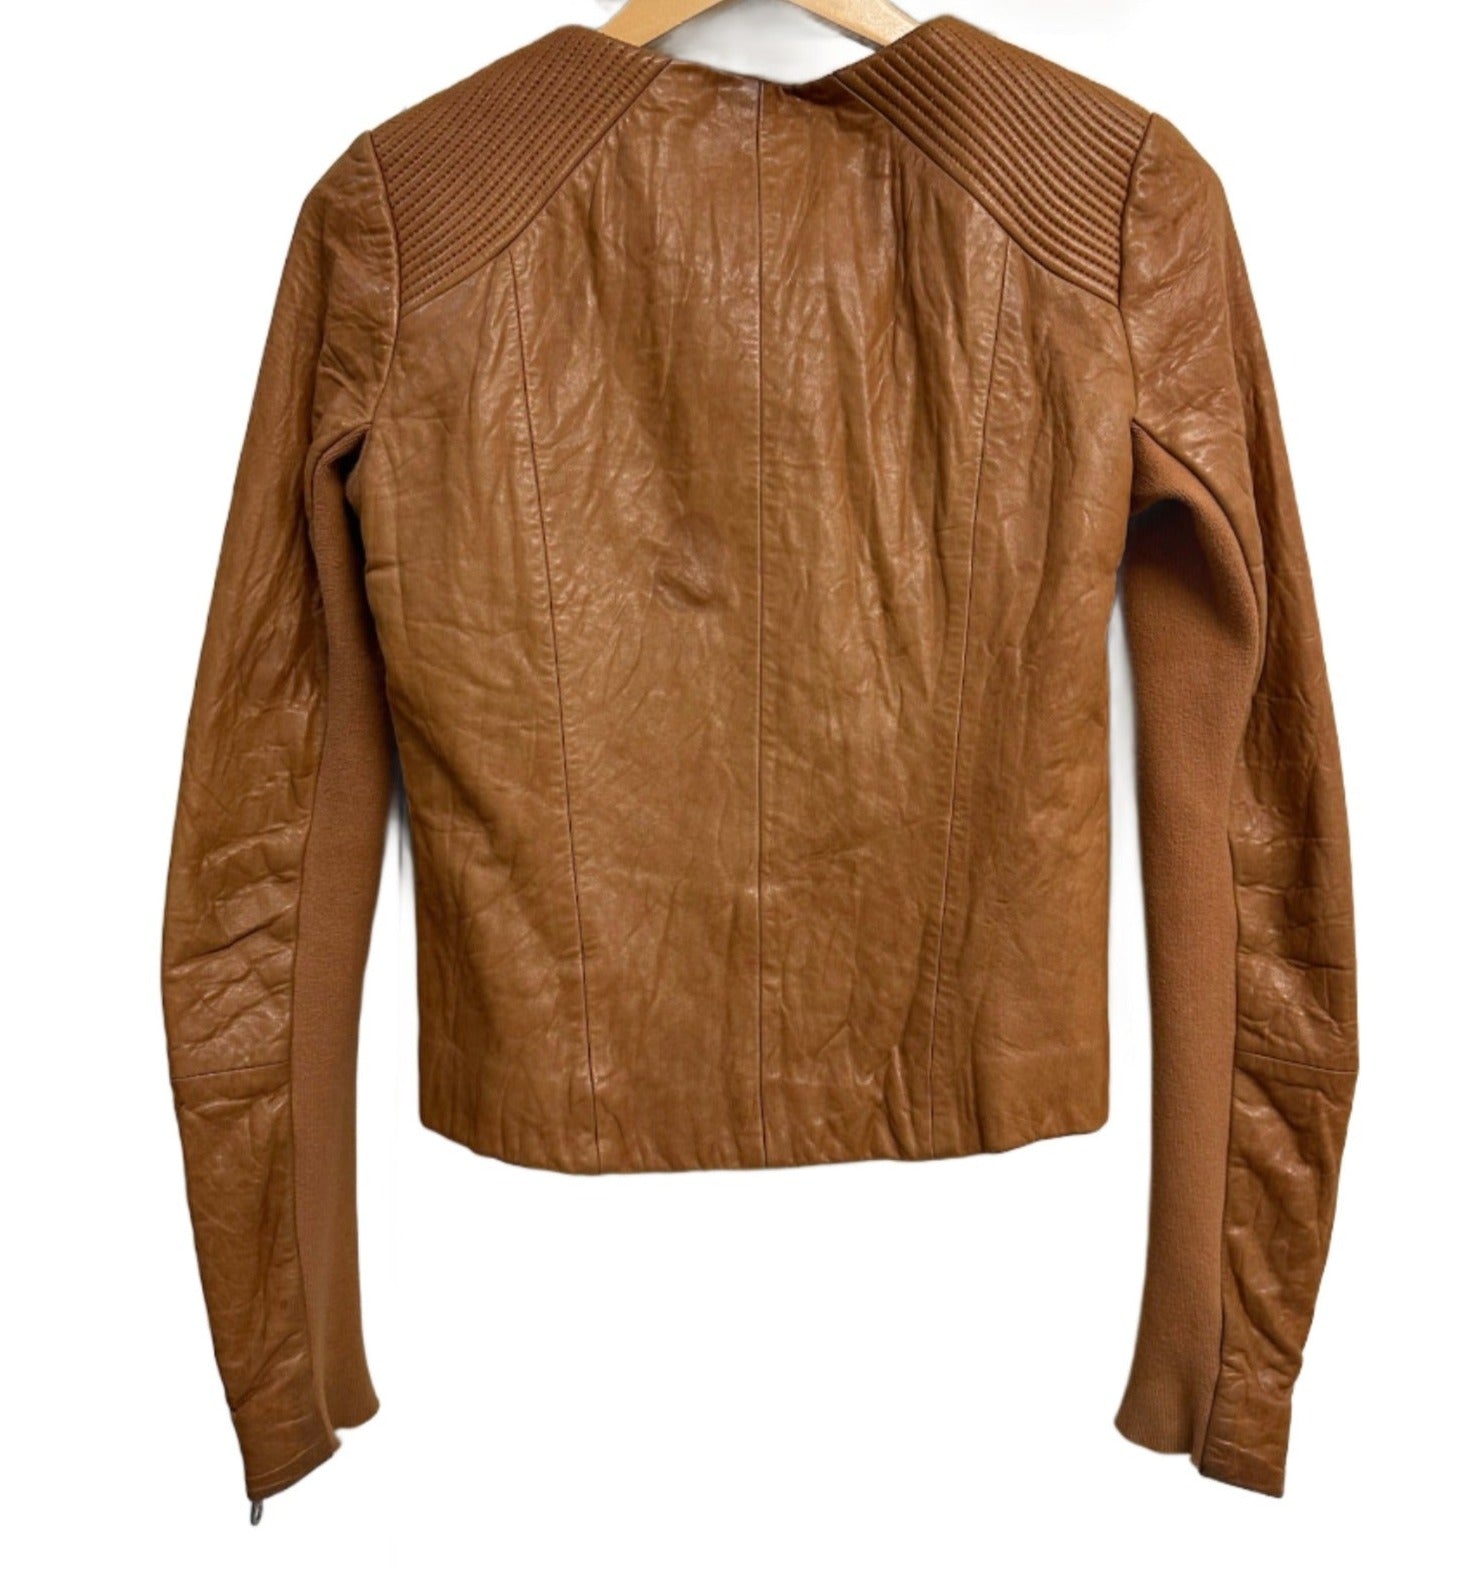 Husk Tan Leather Jacket